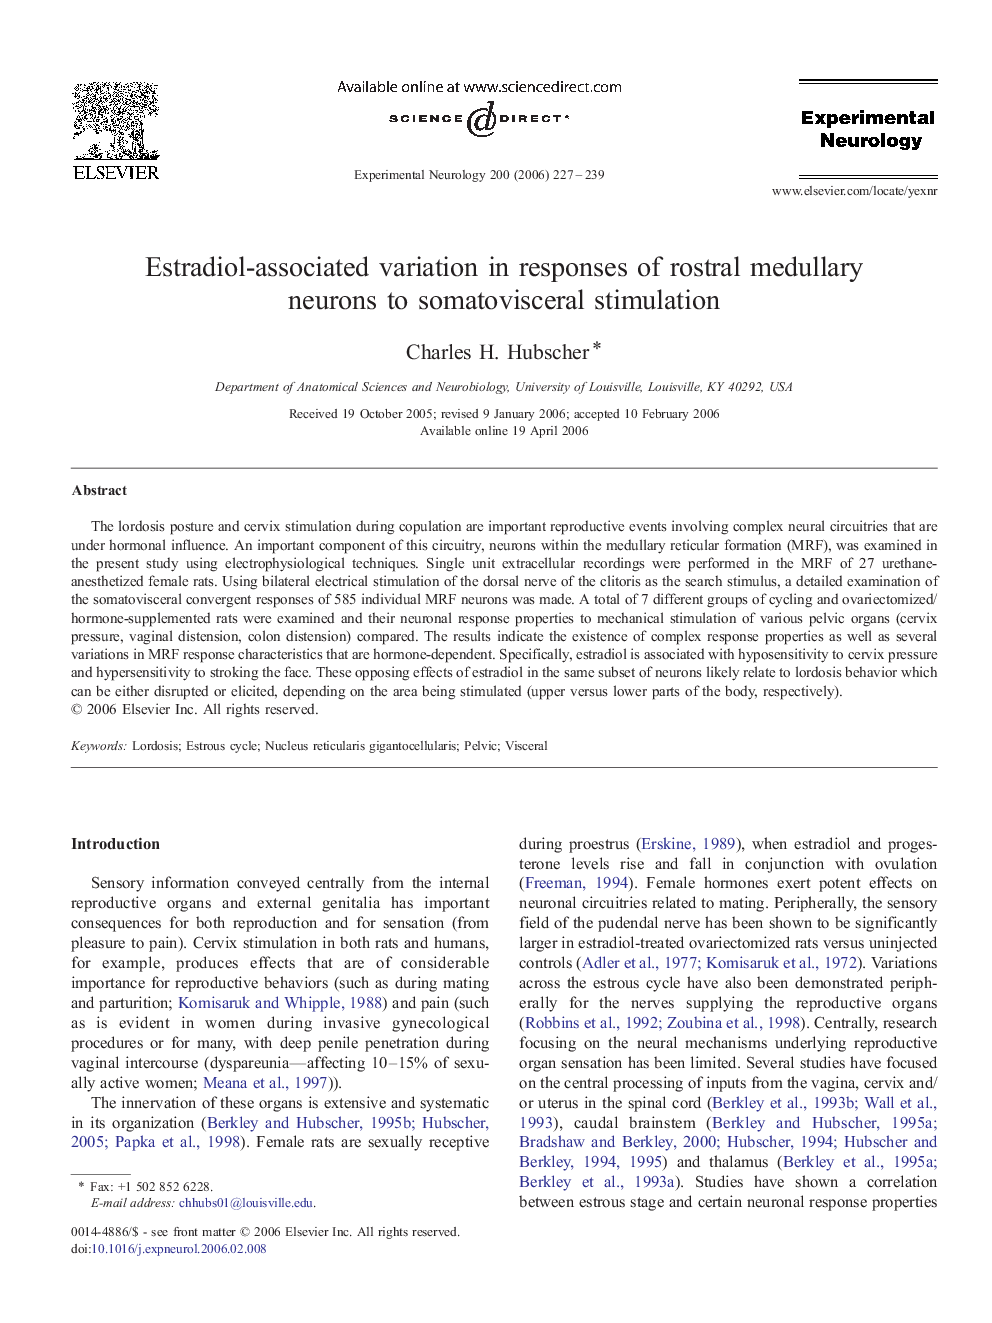 Estradiol-associated variation in responses of rostral medullary neurons to somatovisceral stimulation